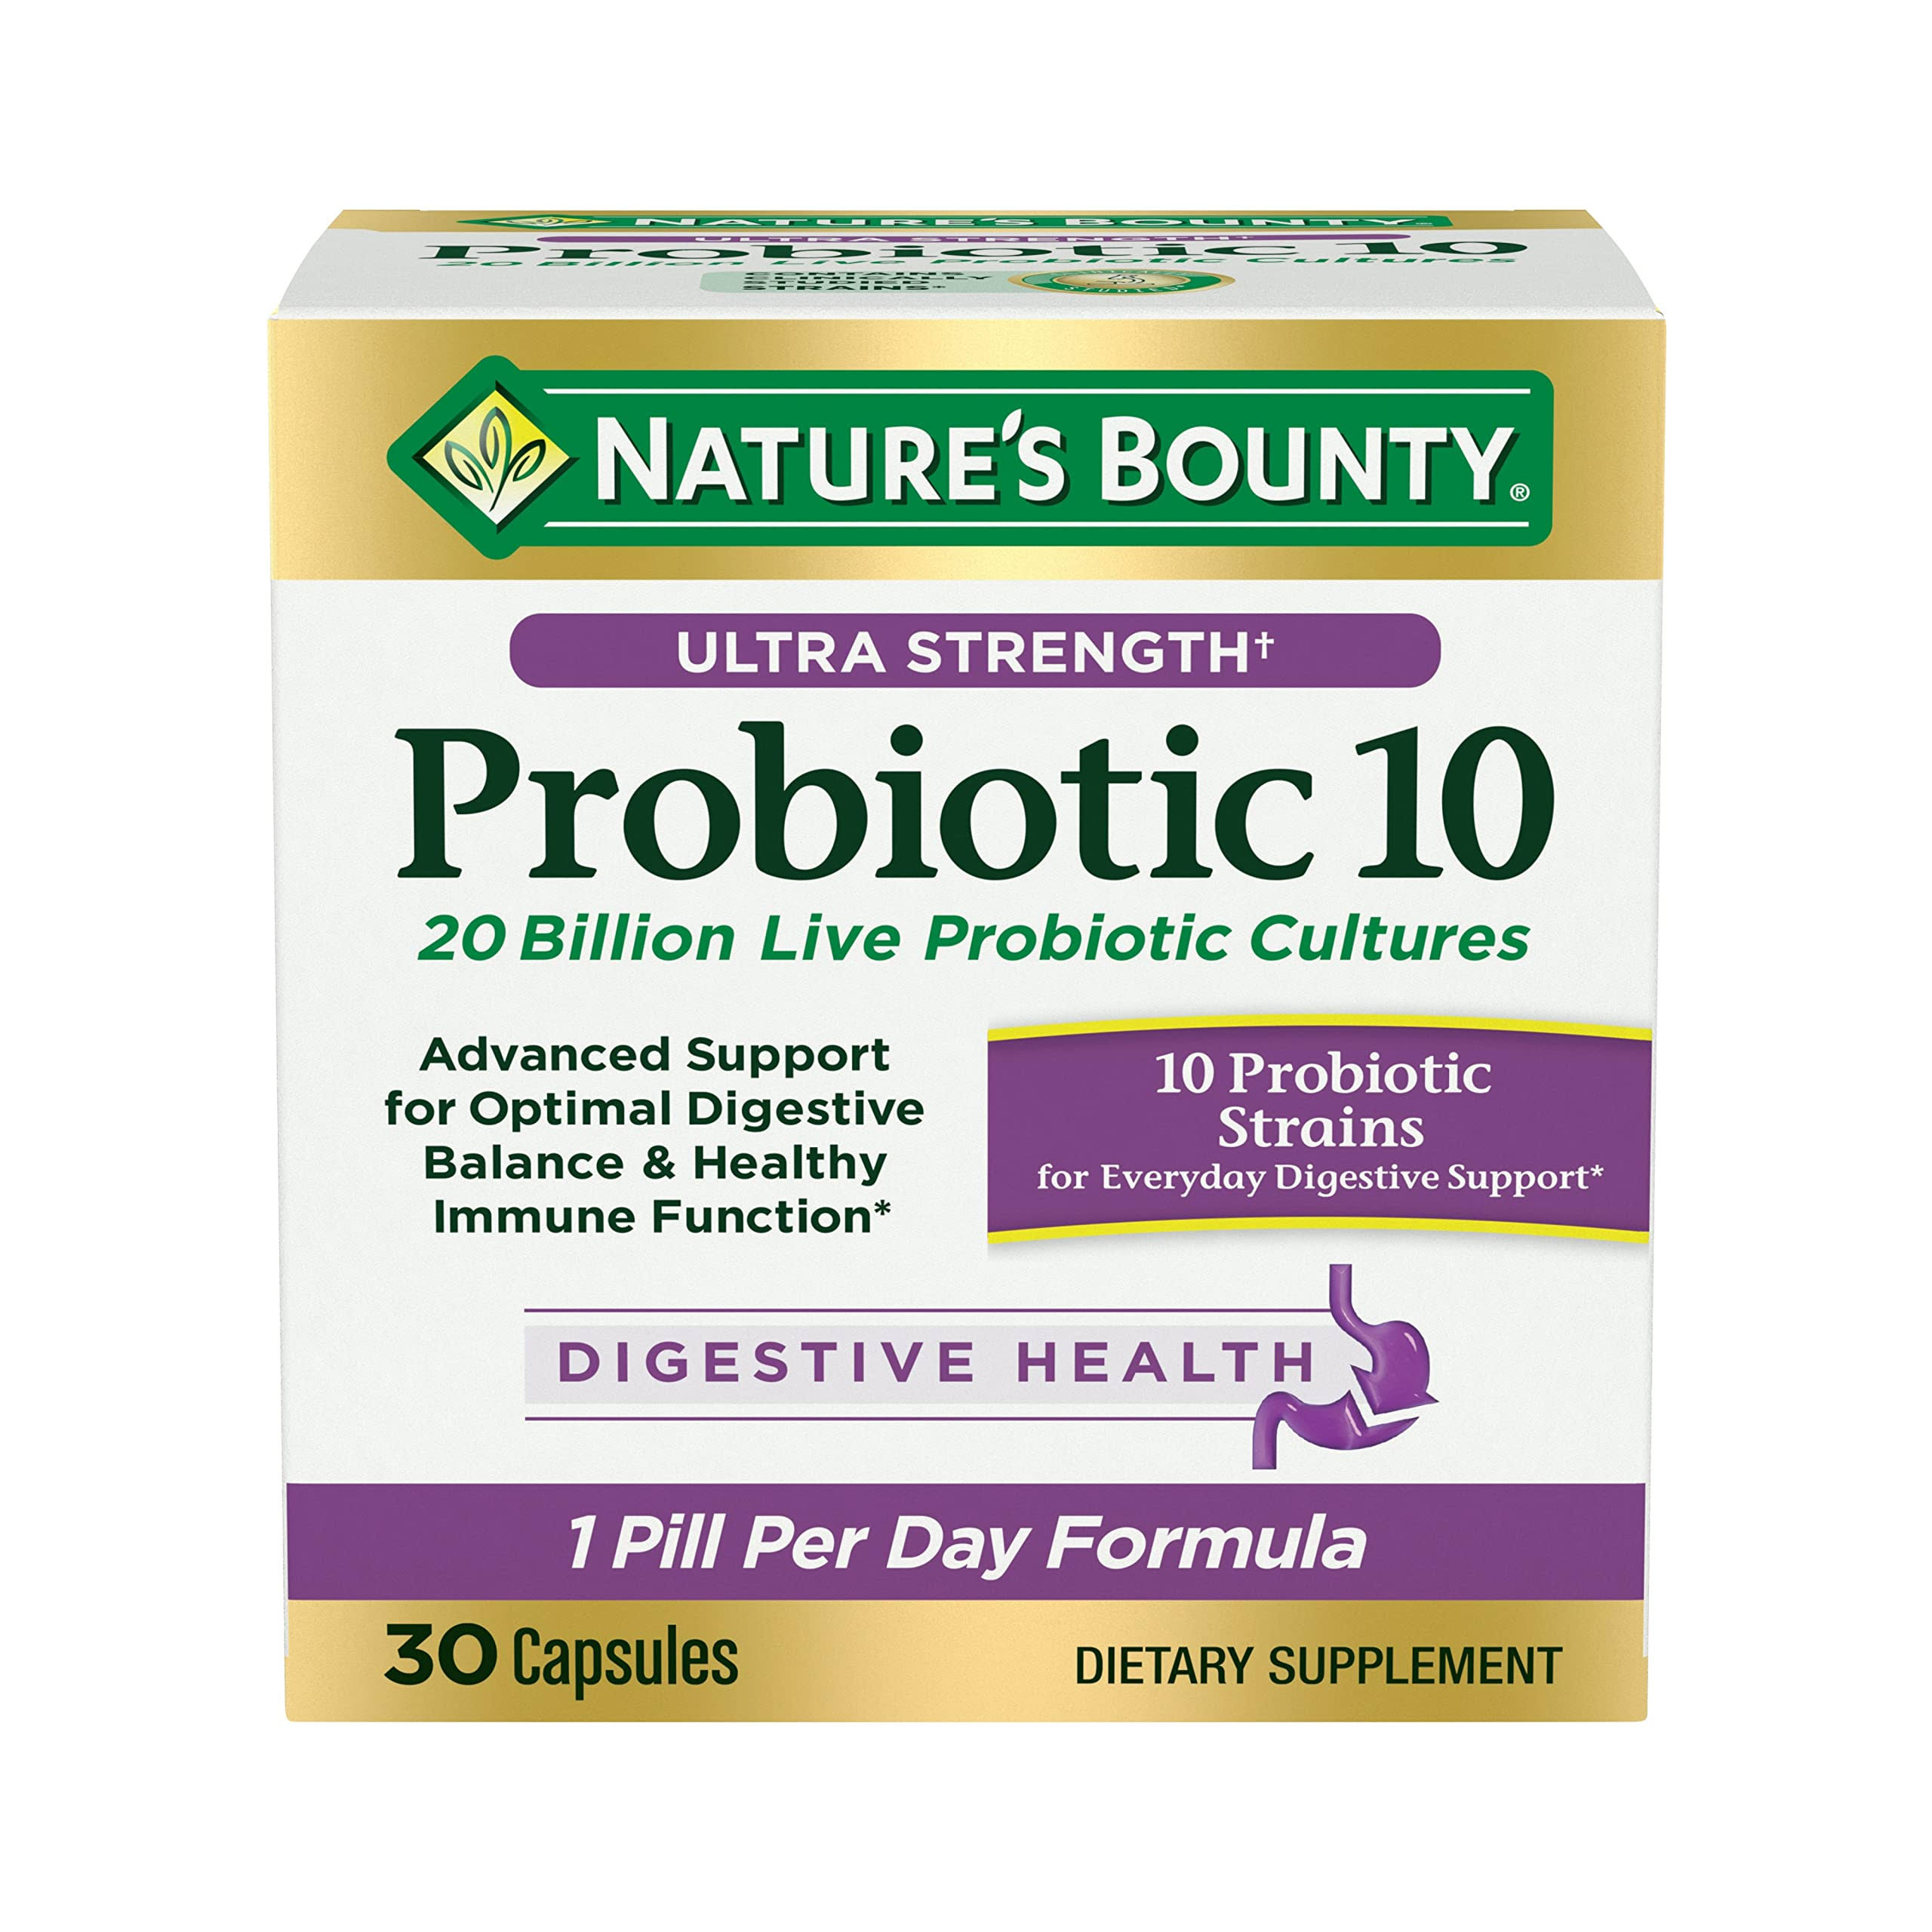 Nature's Bounty Ultra Strength Probiotic 10 - 30 Capsules